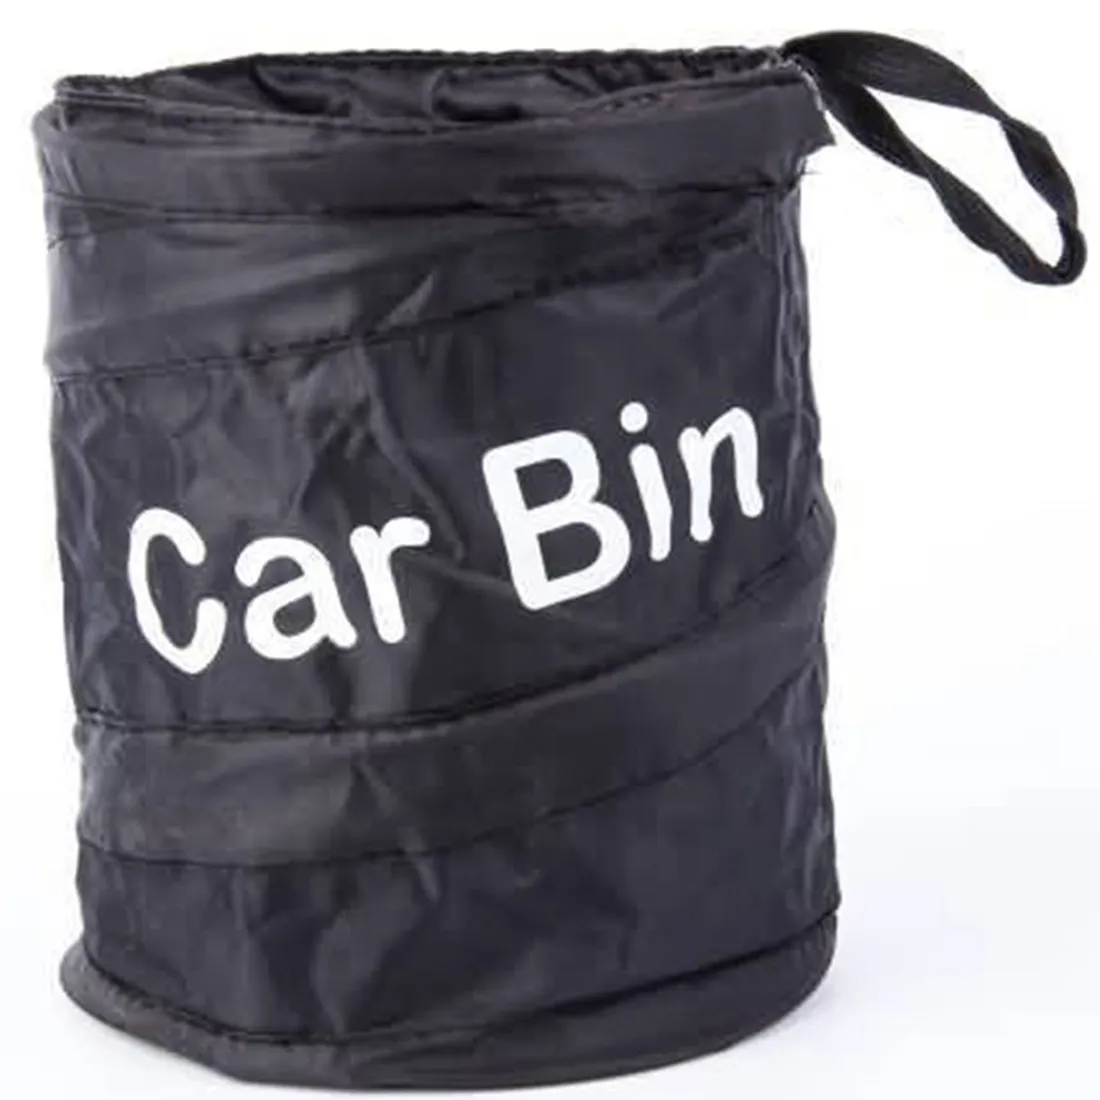 Organizador duradero para asiento trasero de coche, bolsa de basura portátil, bote de basura con bolsillos de almacenamiento